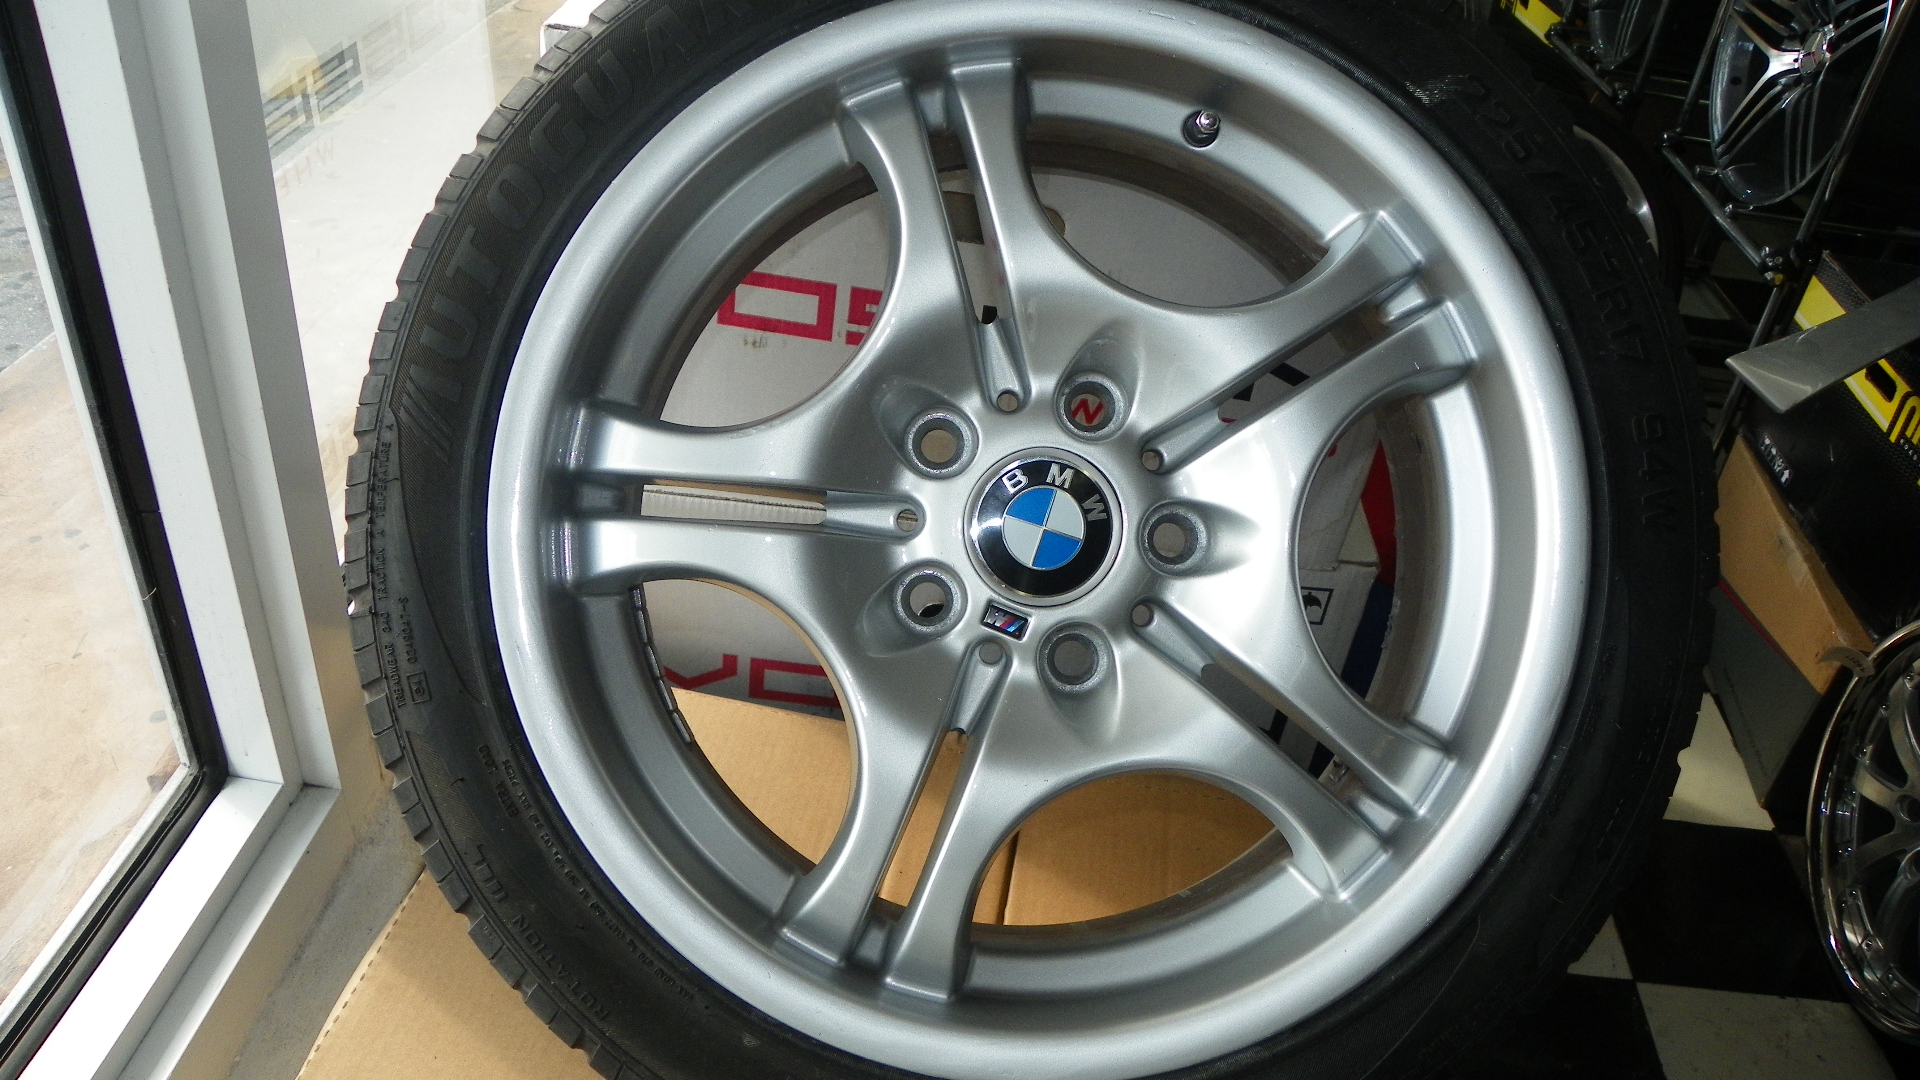 BMW WHEEL SET 17"  M-3  GENUINE #899  W  TIRES  STAGGERED 49899